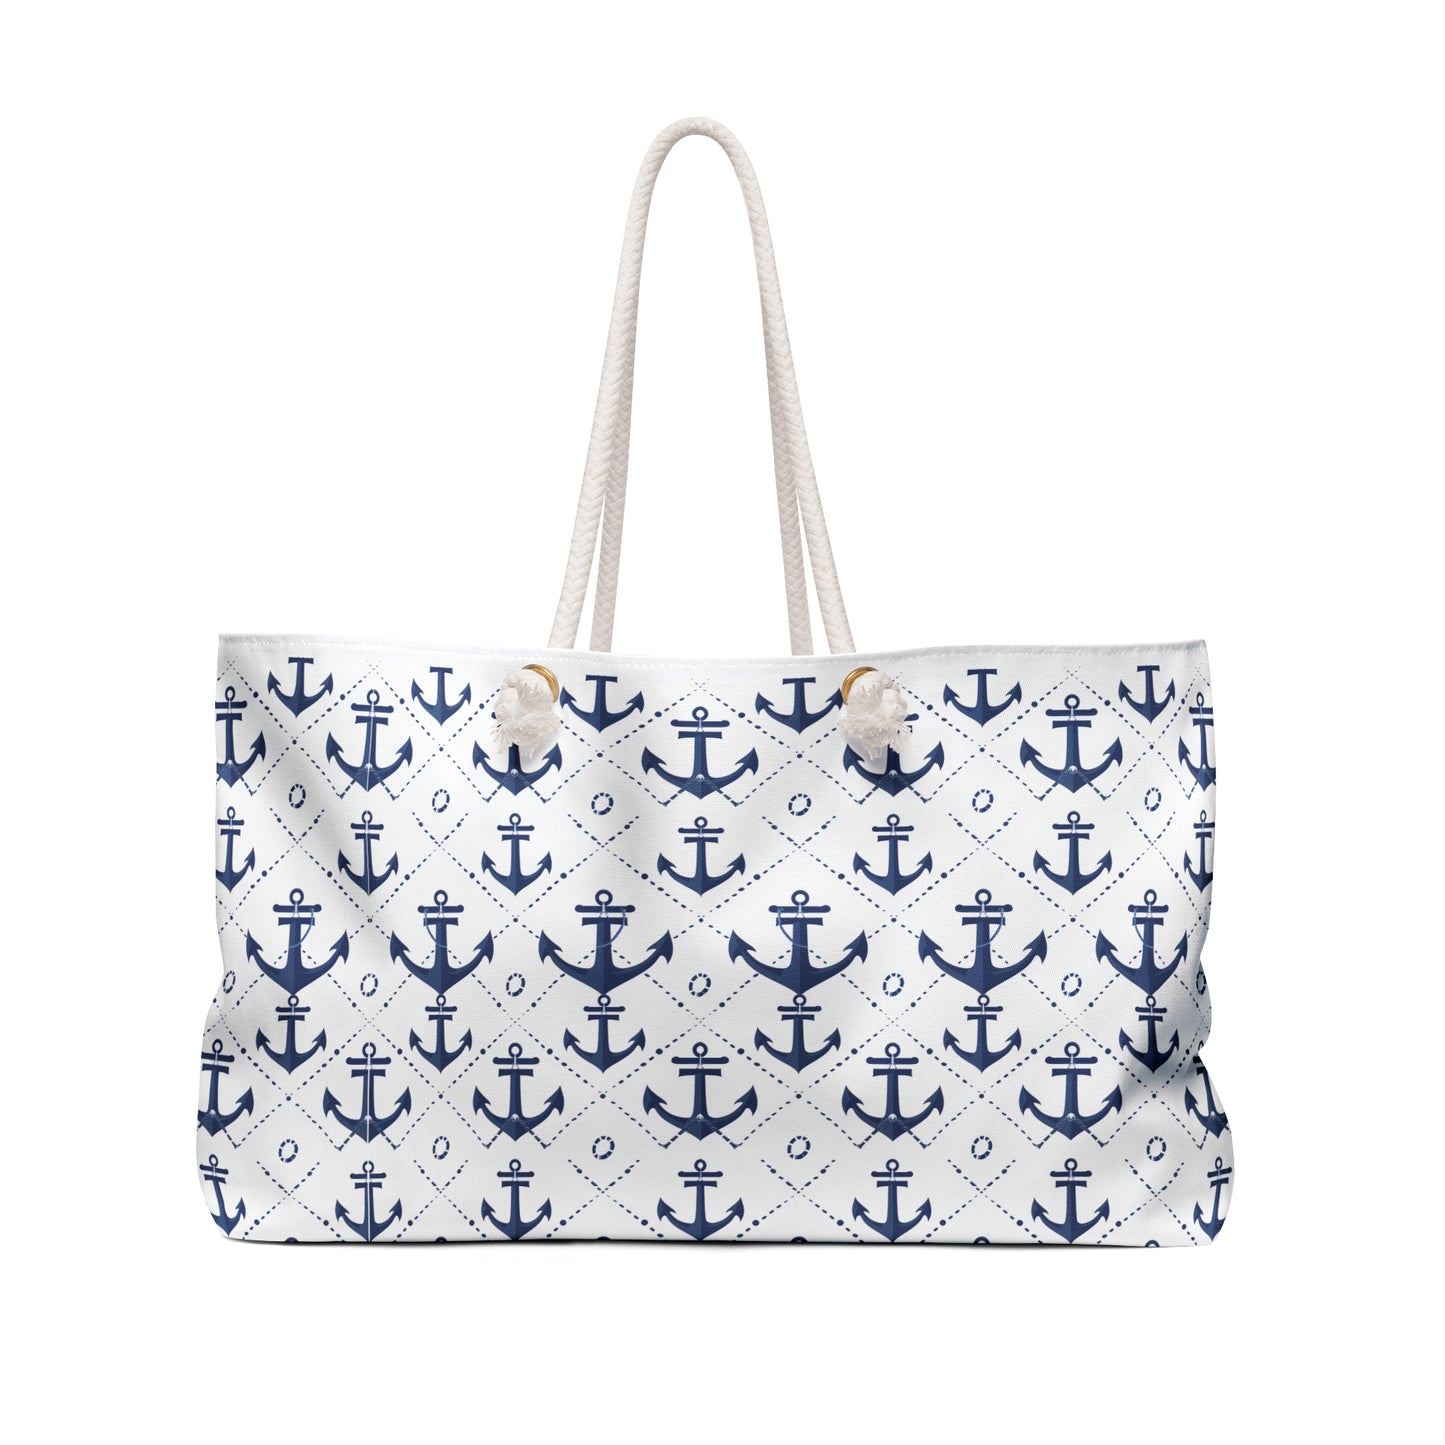 Deluxe Nautical Tote & Beach Bag with Elegant Navy Design (24" × 13" x 5.5")